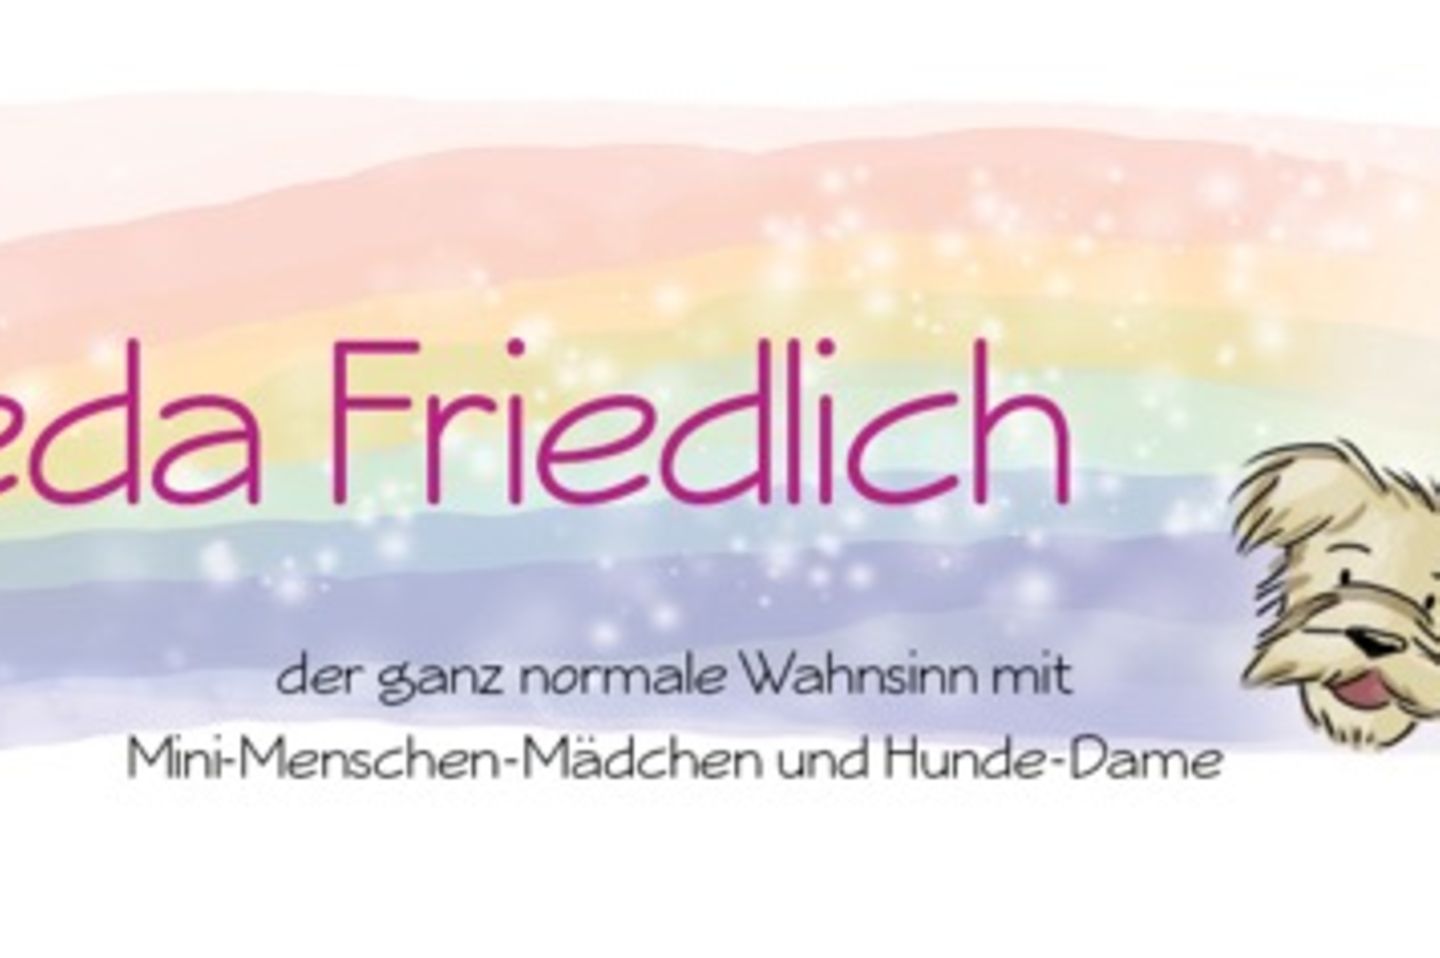 Frieda Friedlich: Über Frieda Friedlich